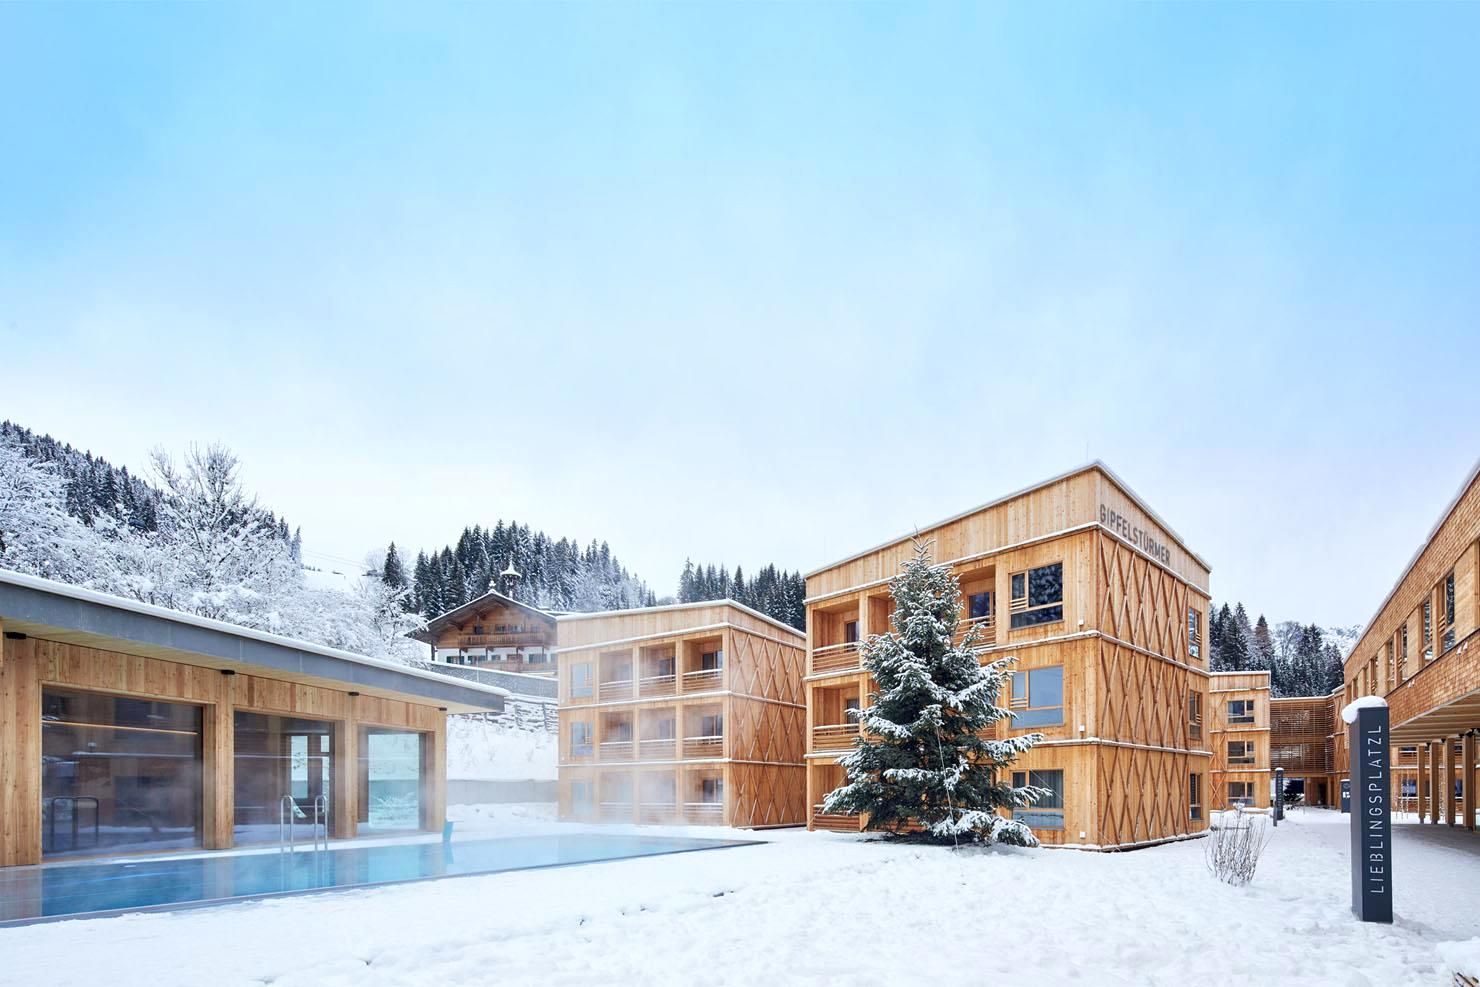 Slide1 - Tirol Lodge